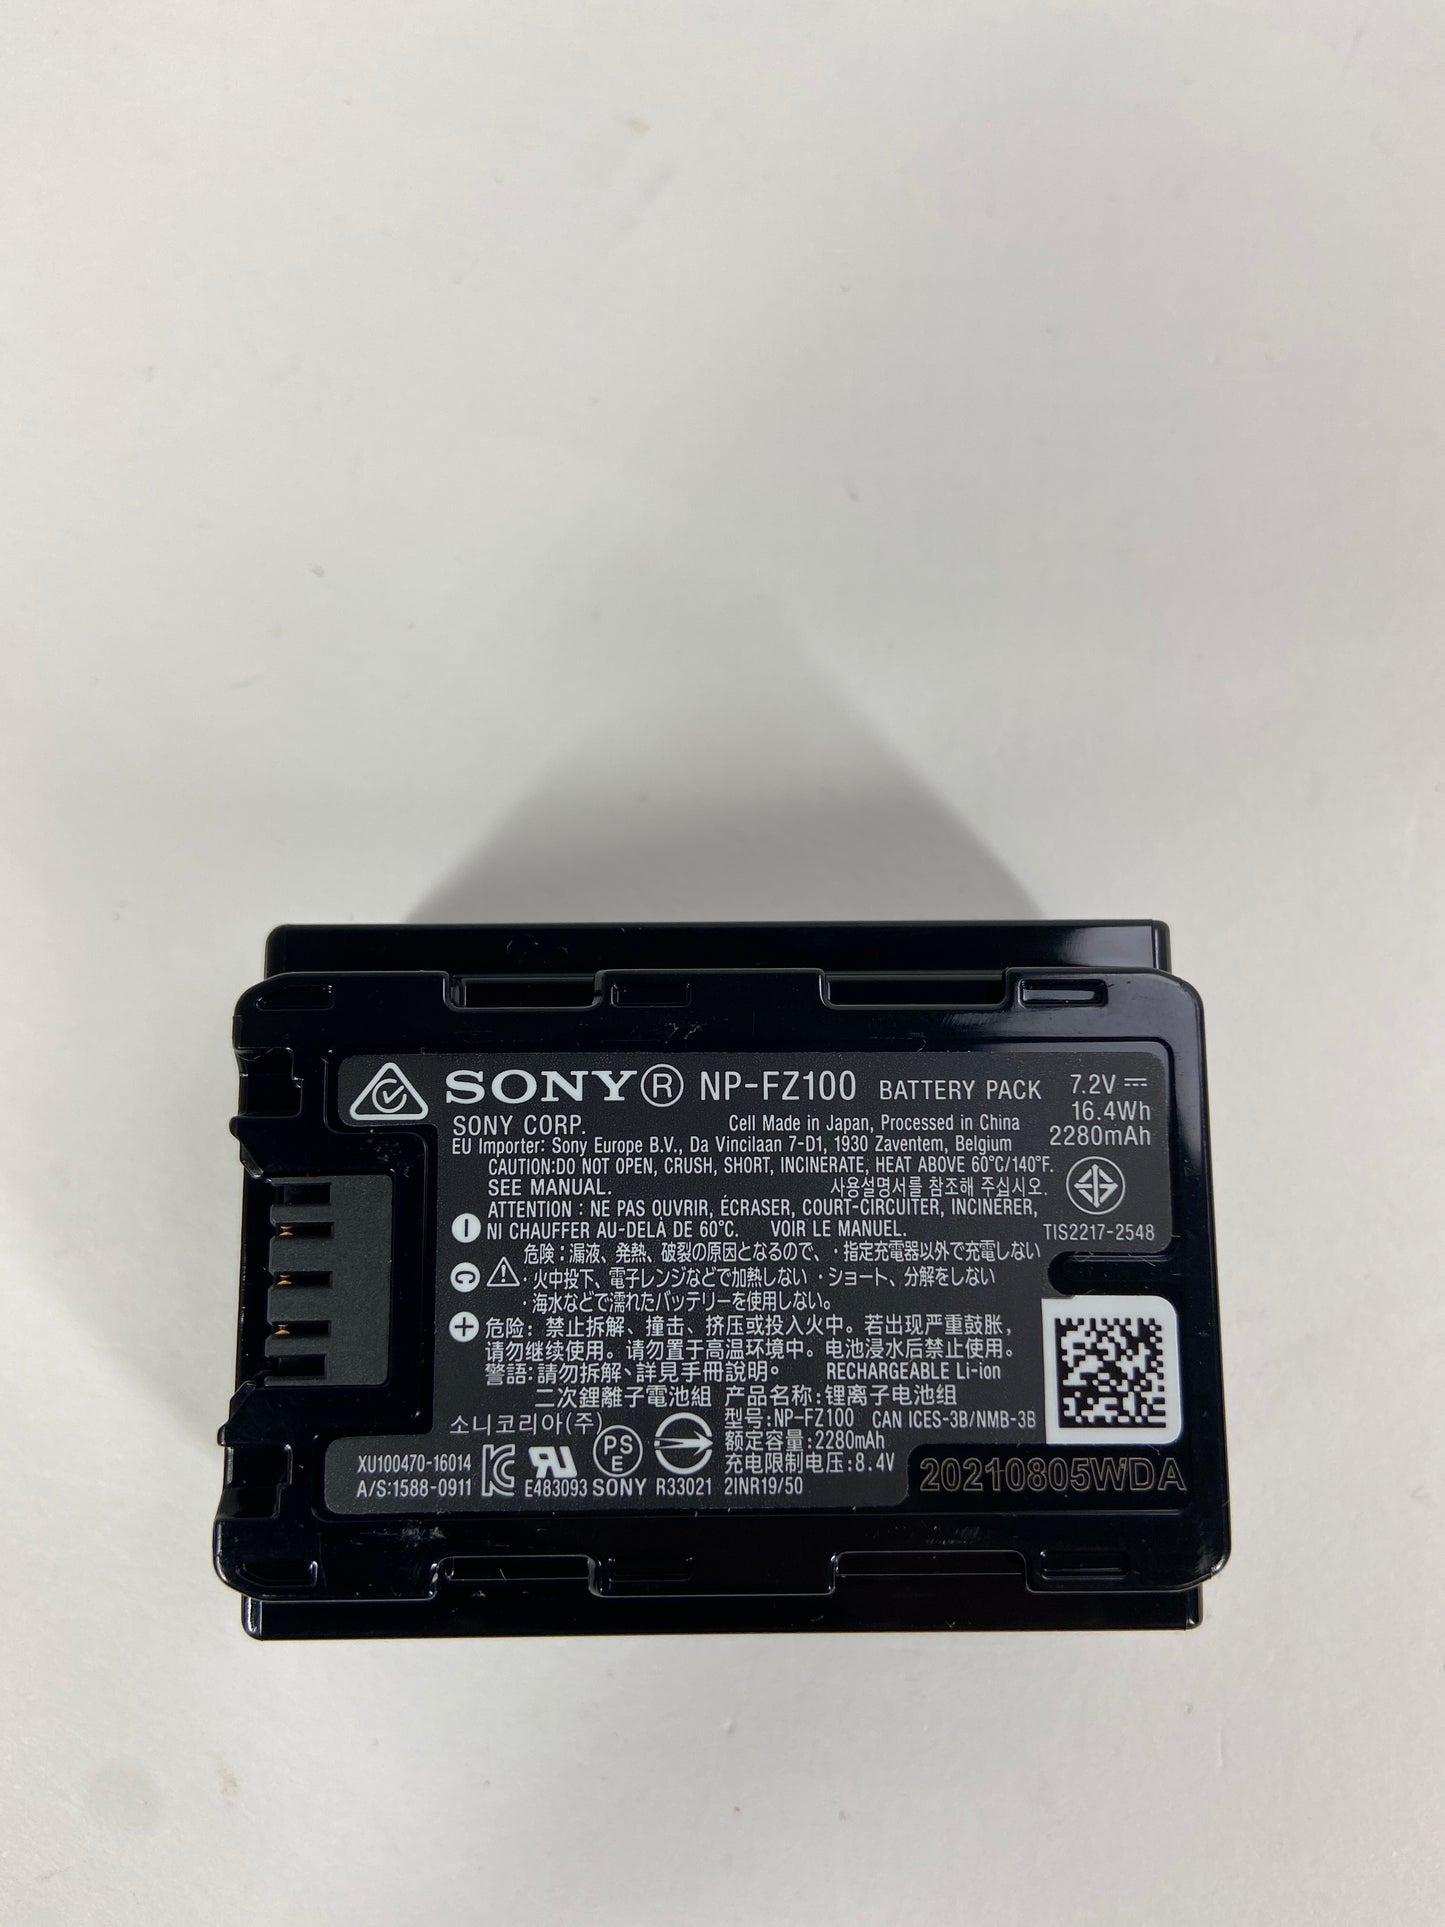 Sony Alpha 7 III 24.2 Full-Frame Mirrorless Digital Camera 238 Shutter Count